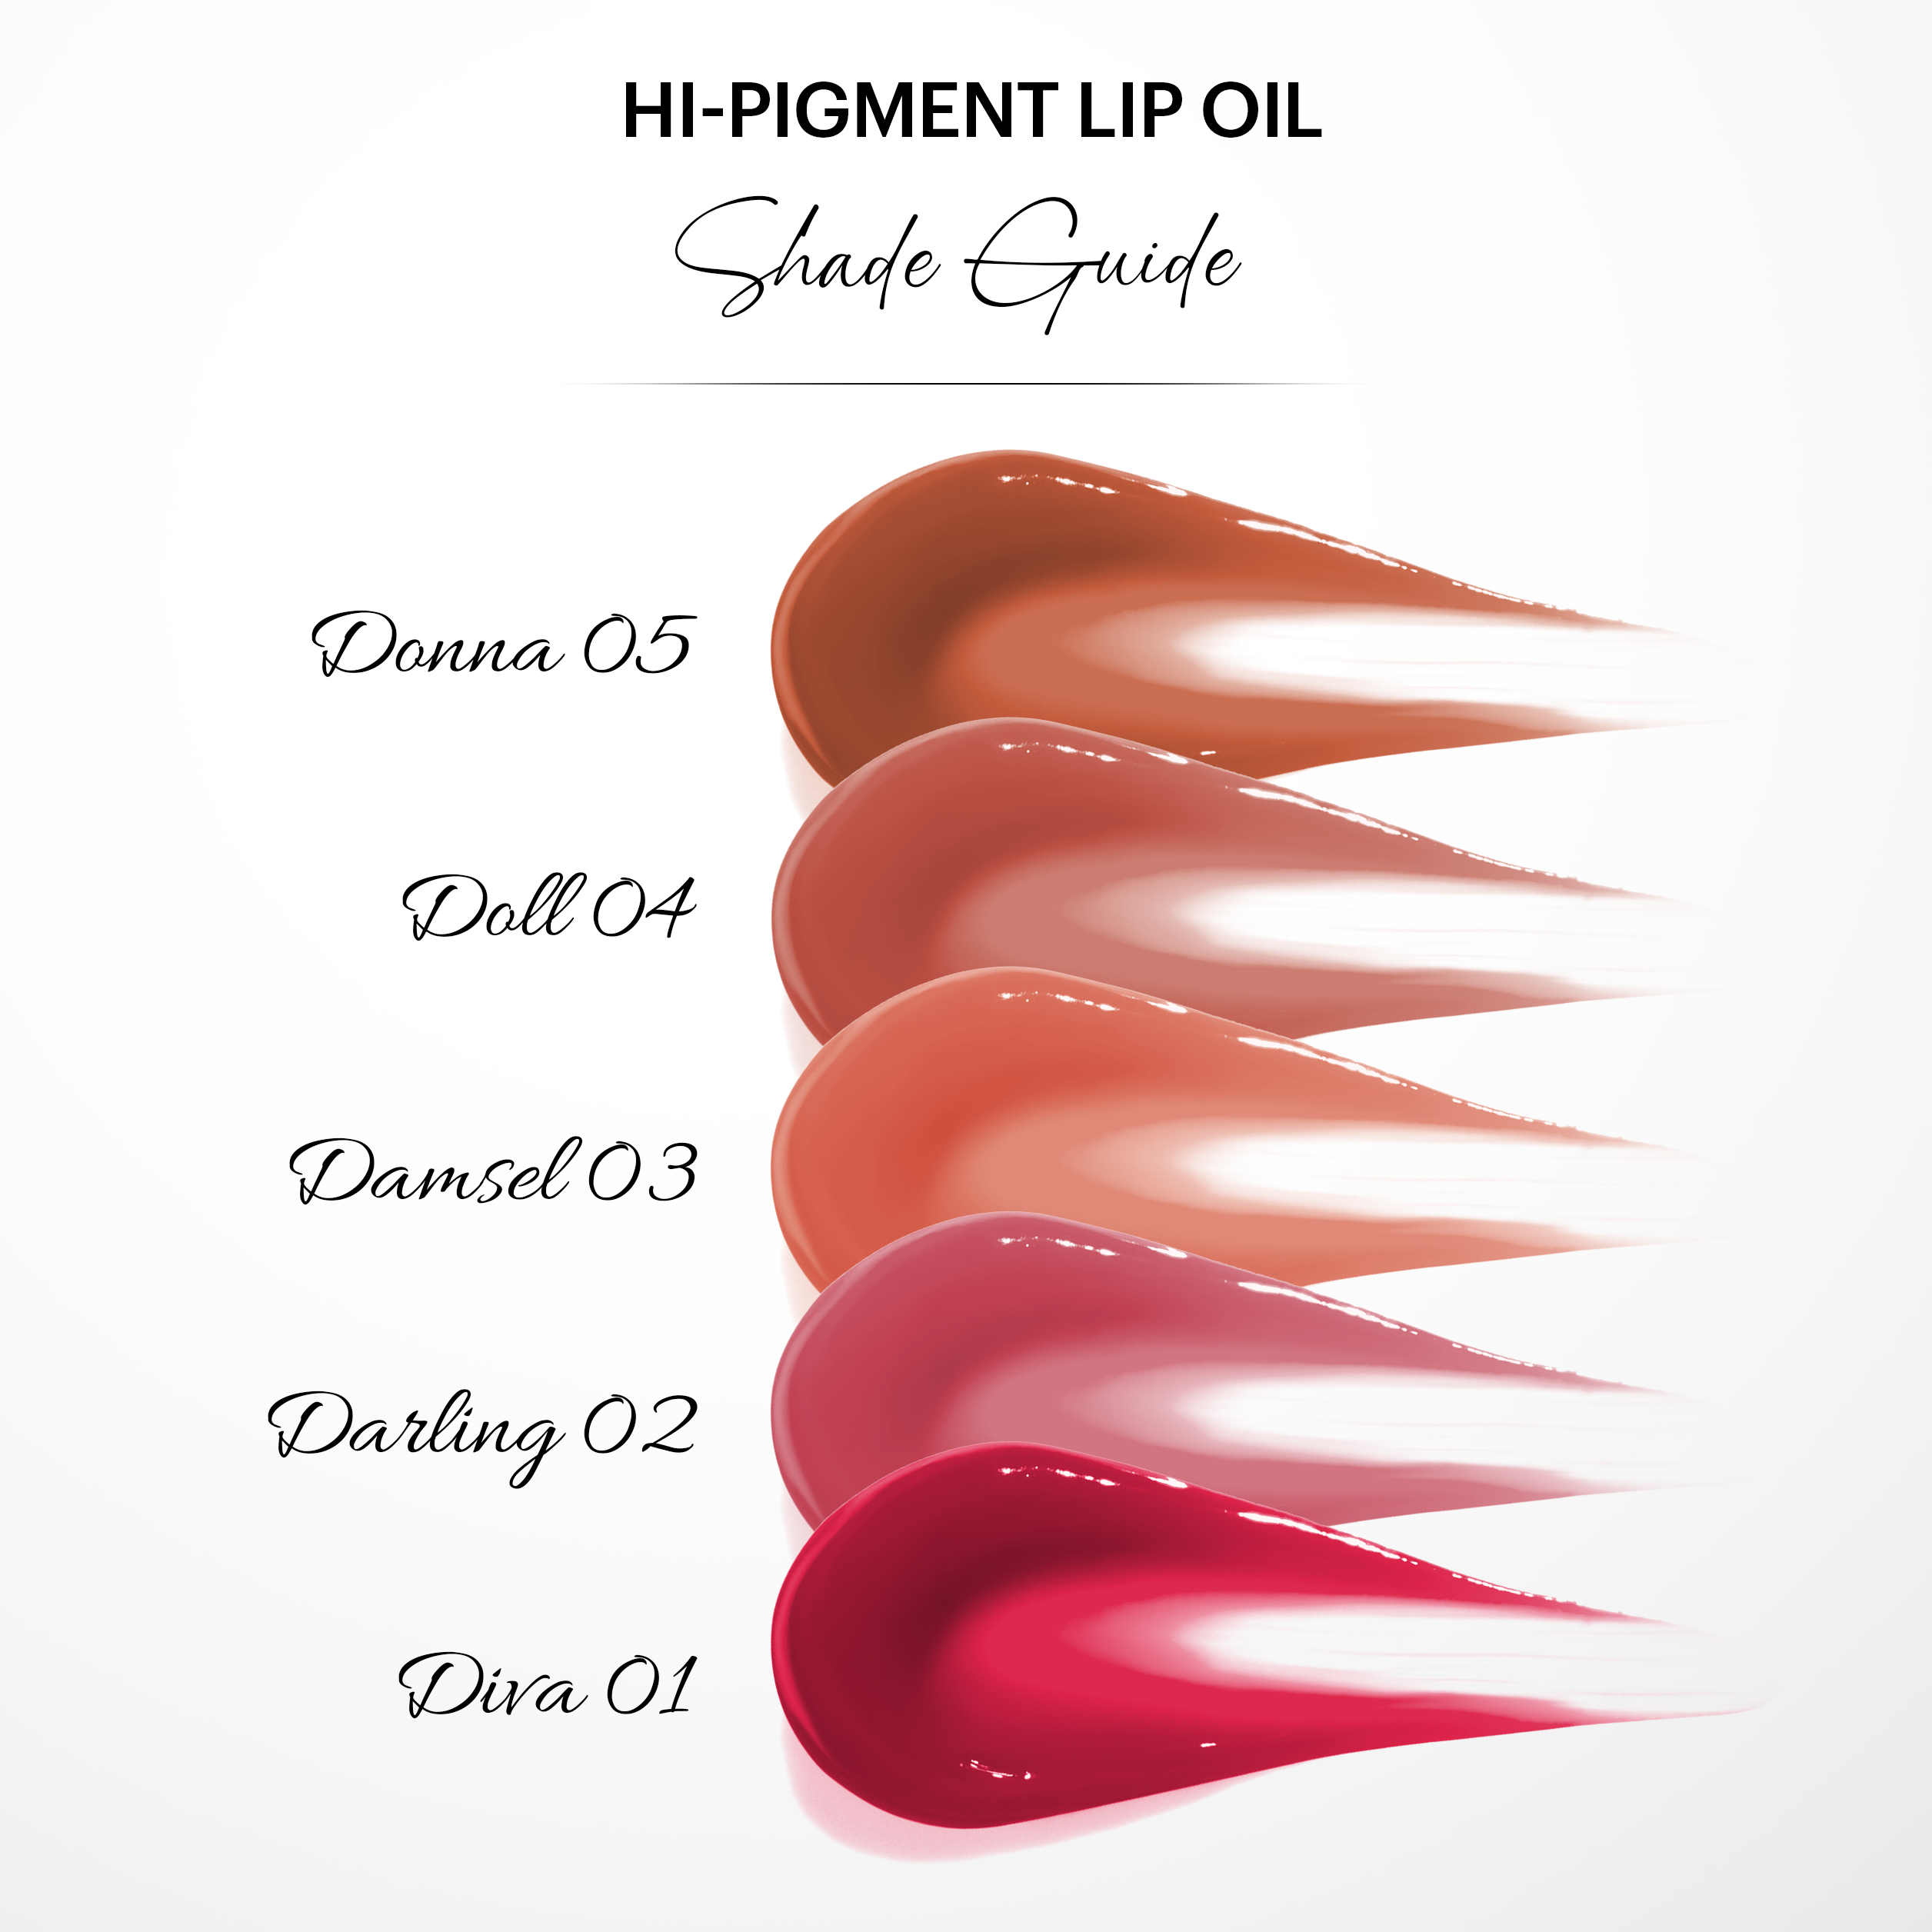 Hi-Pigment Lip Oil: Donna 05